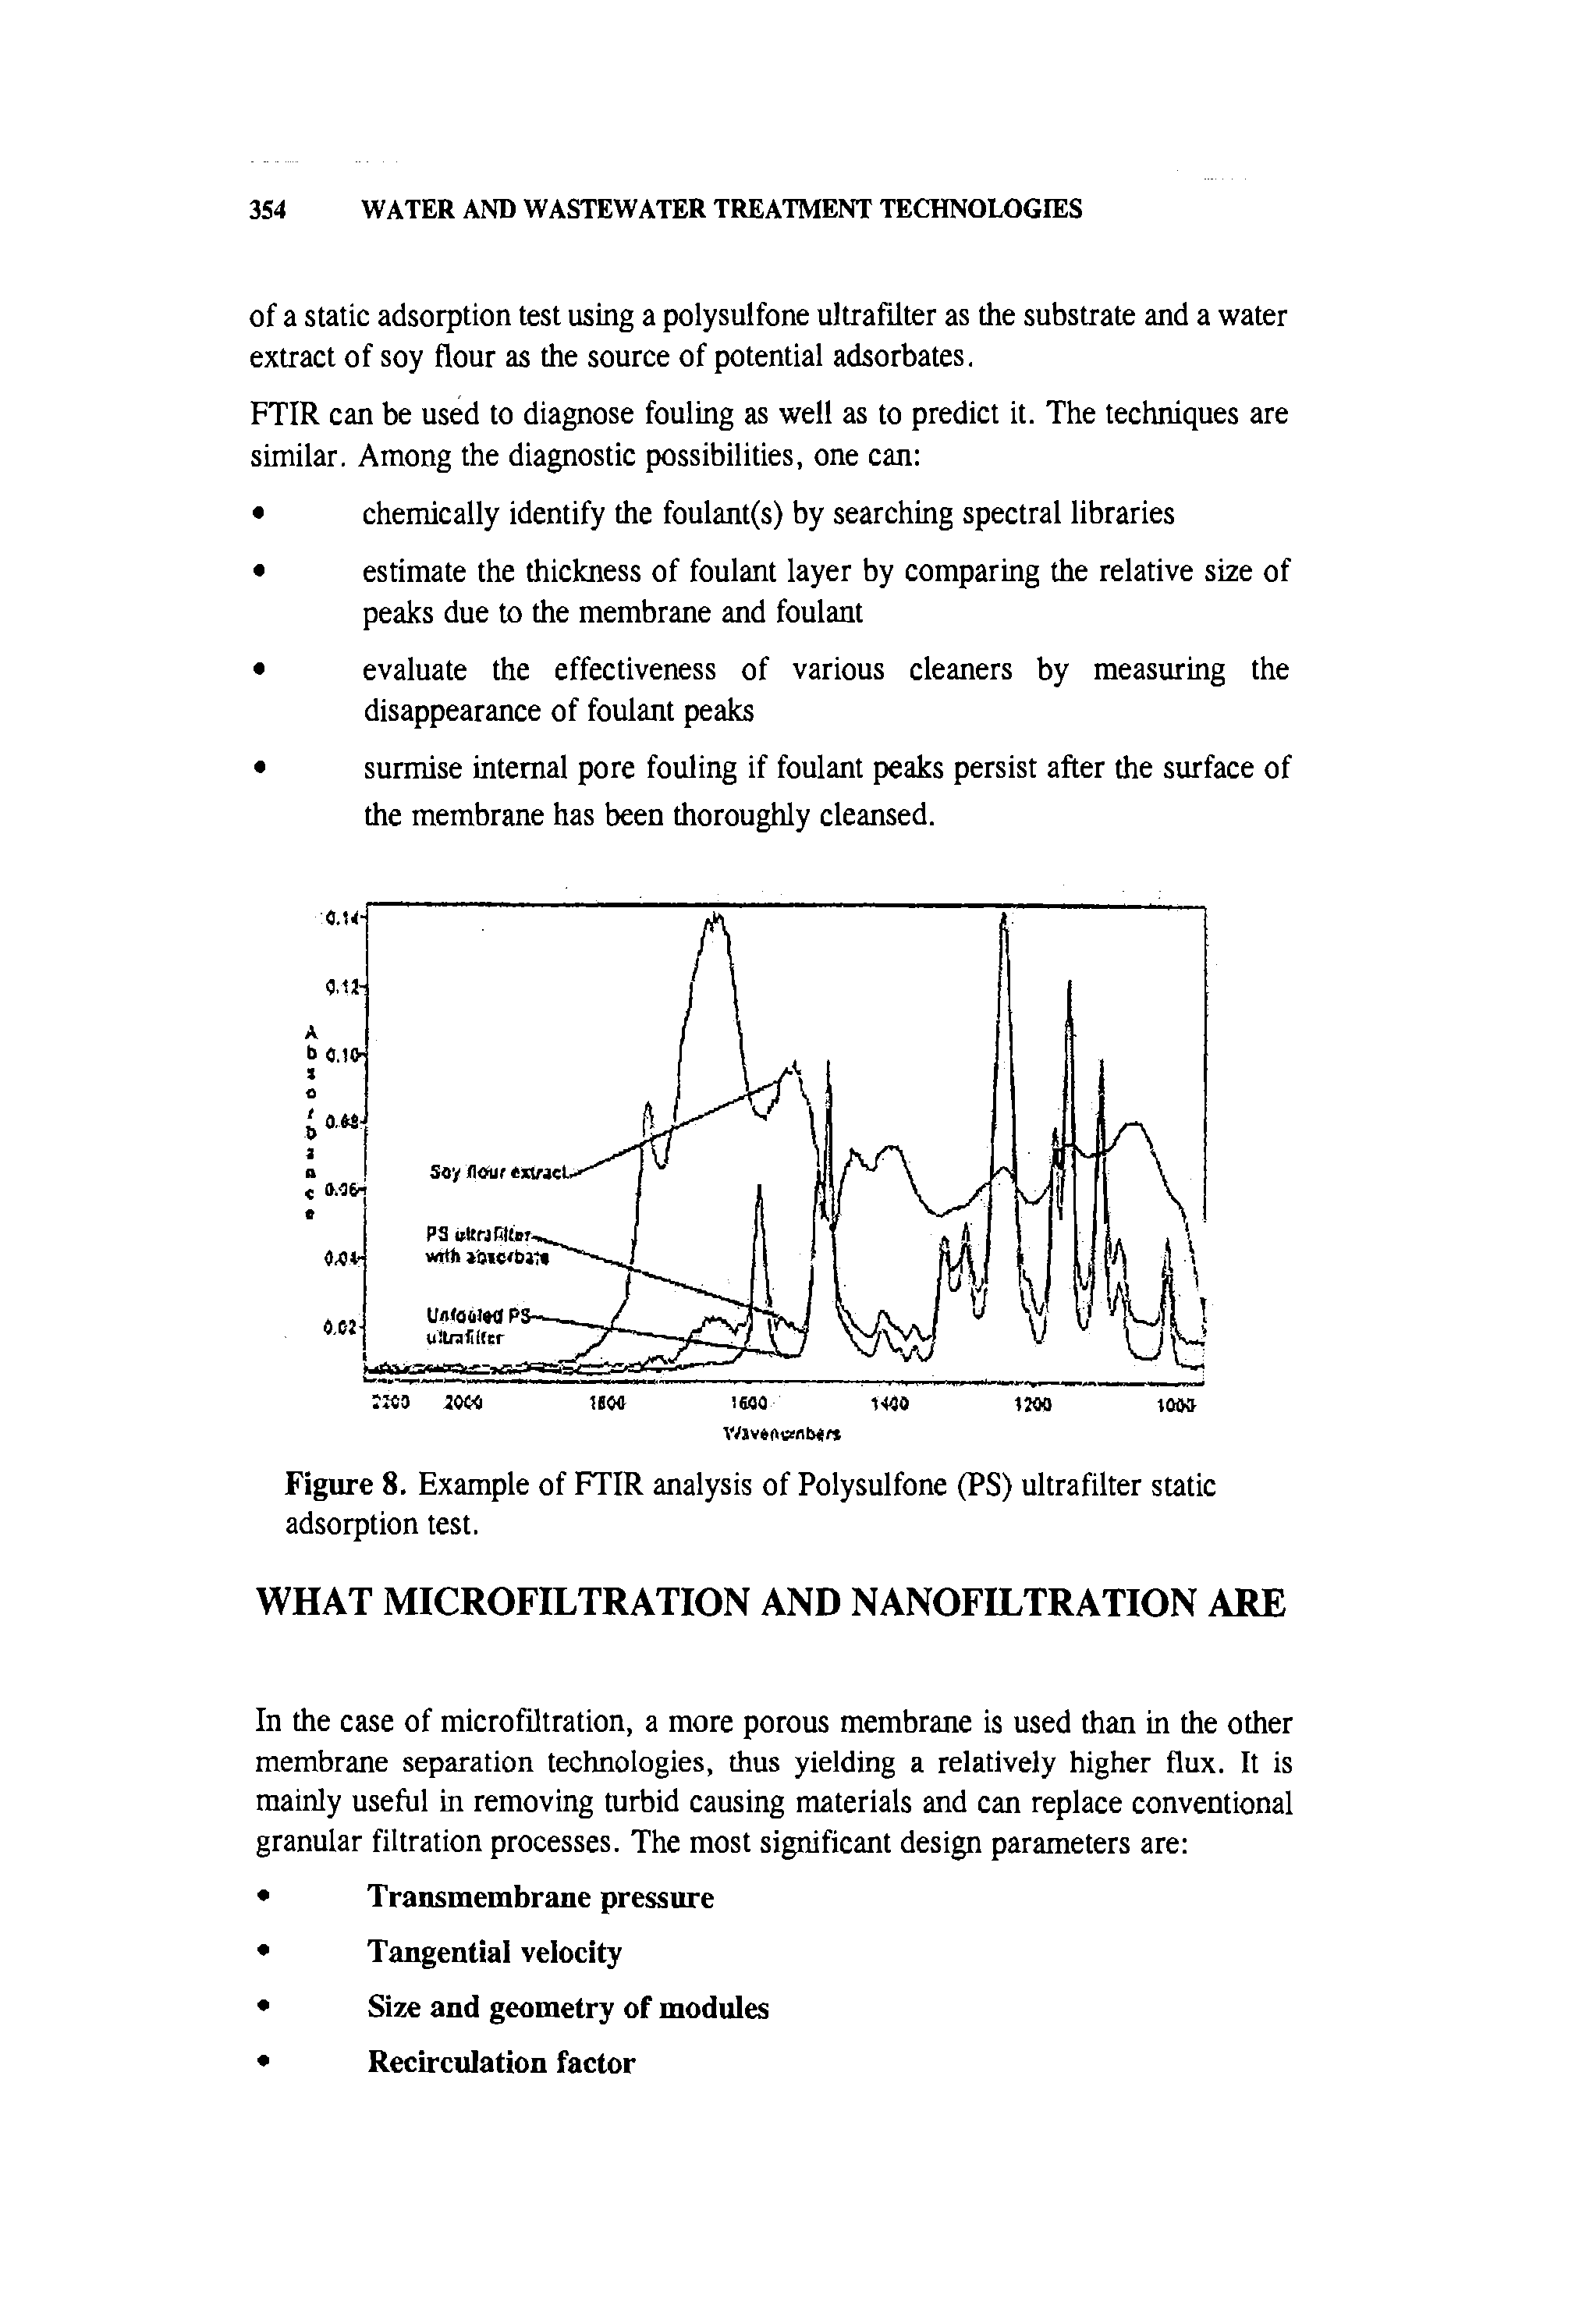 Figure 8. Example of FTIR analysis of Polysulfone (PS) ultrafilter static adsorption test.